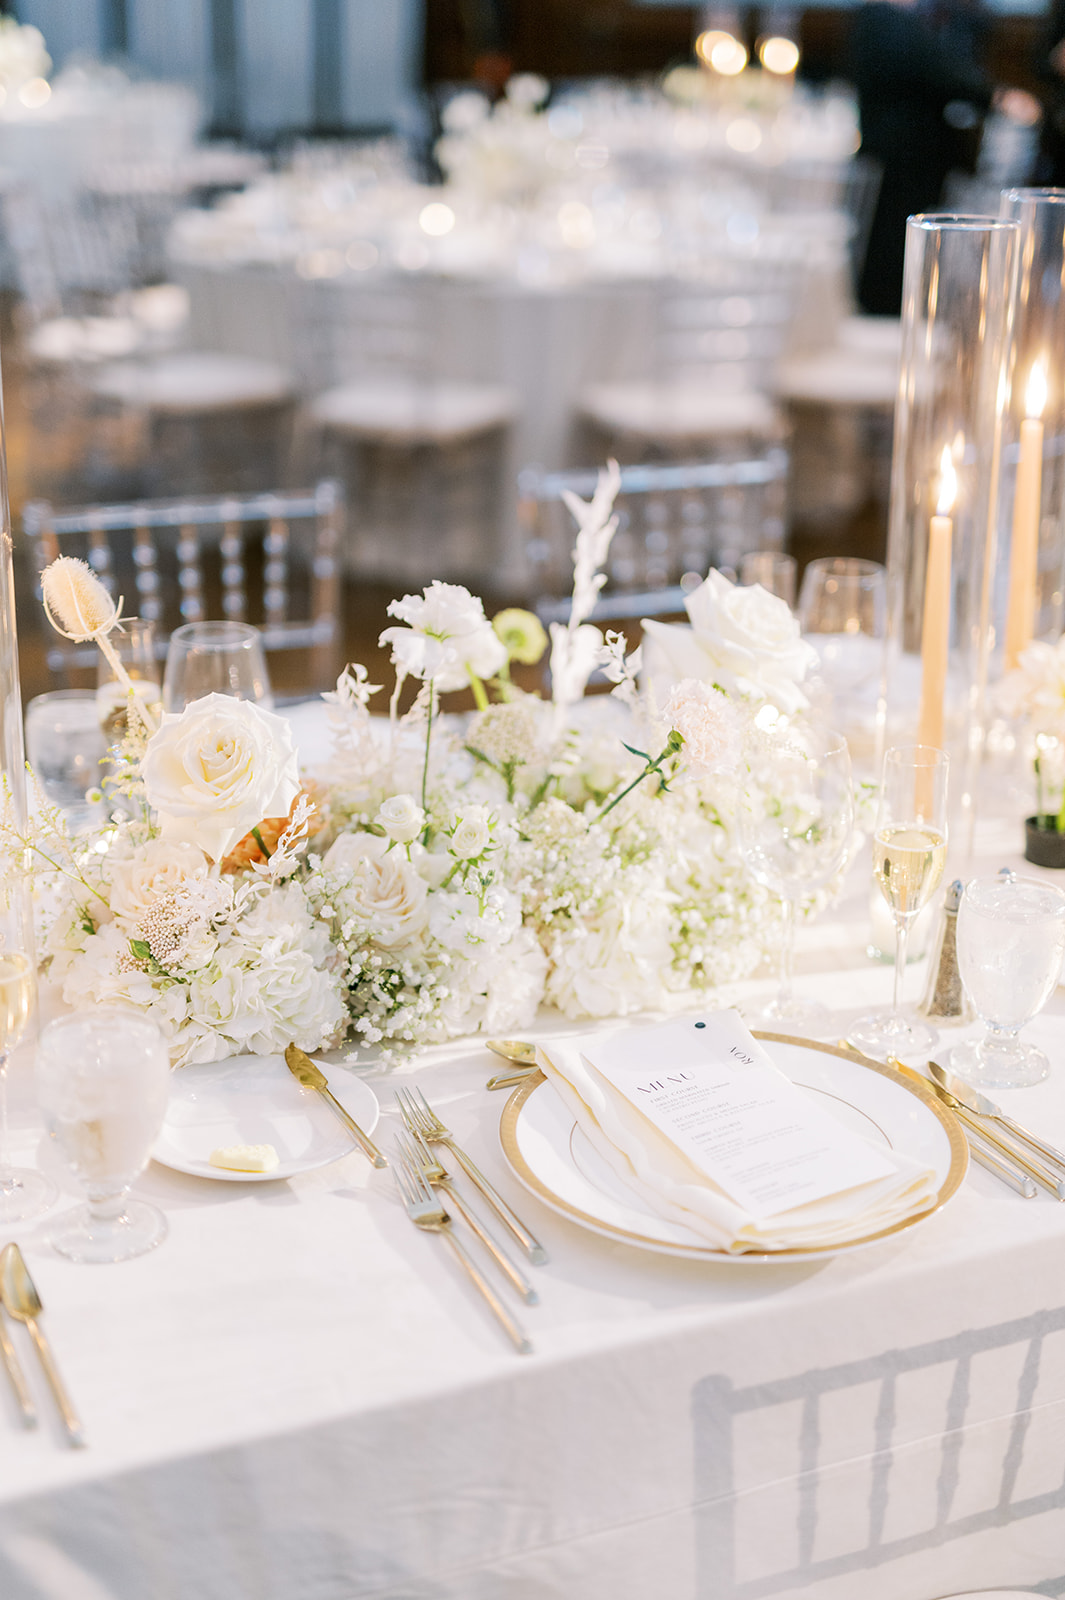 modern monochrome white floral table setting at classic union league of philadelphia wedding